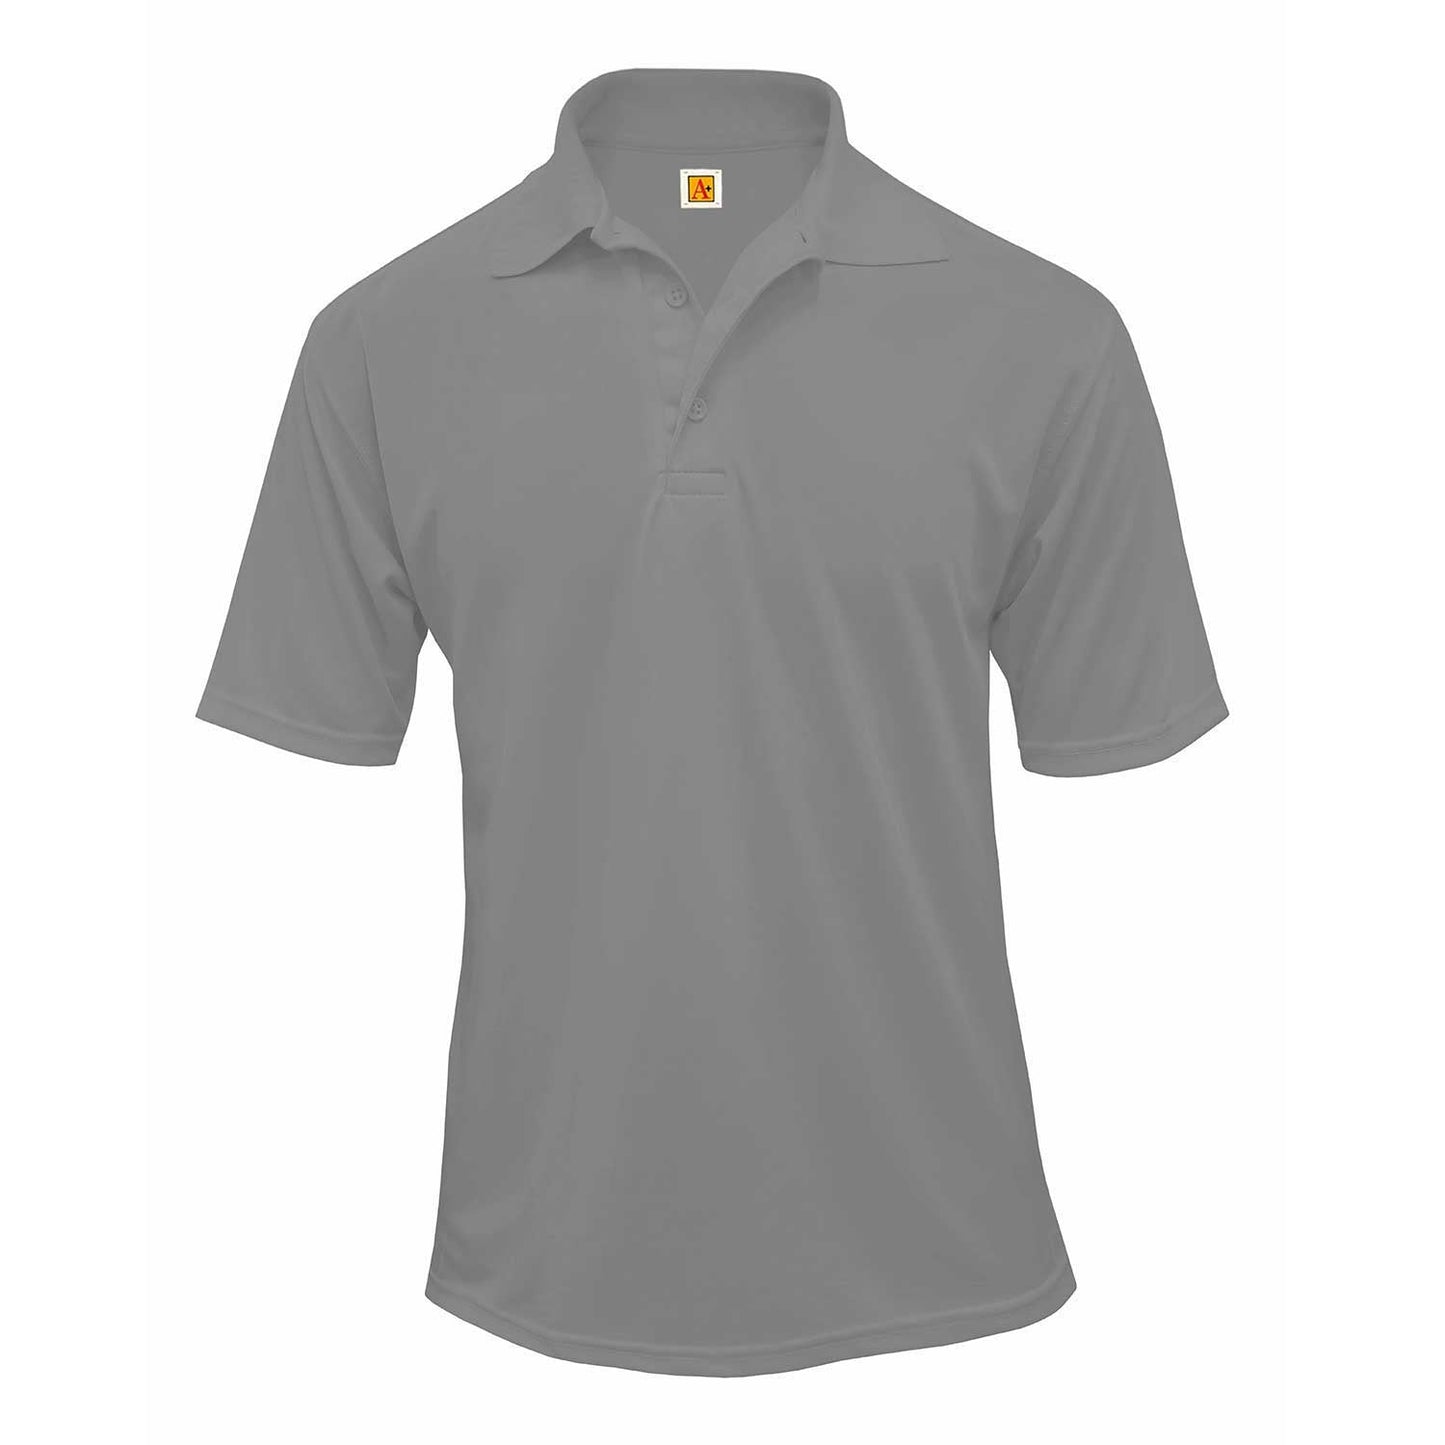 Performance Dri-fit Jersey Knit Short Sleeve Shirt (Unisex) w/Logo - 1101